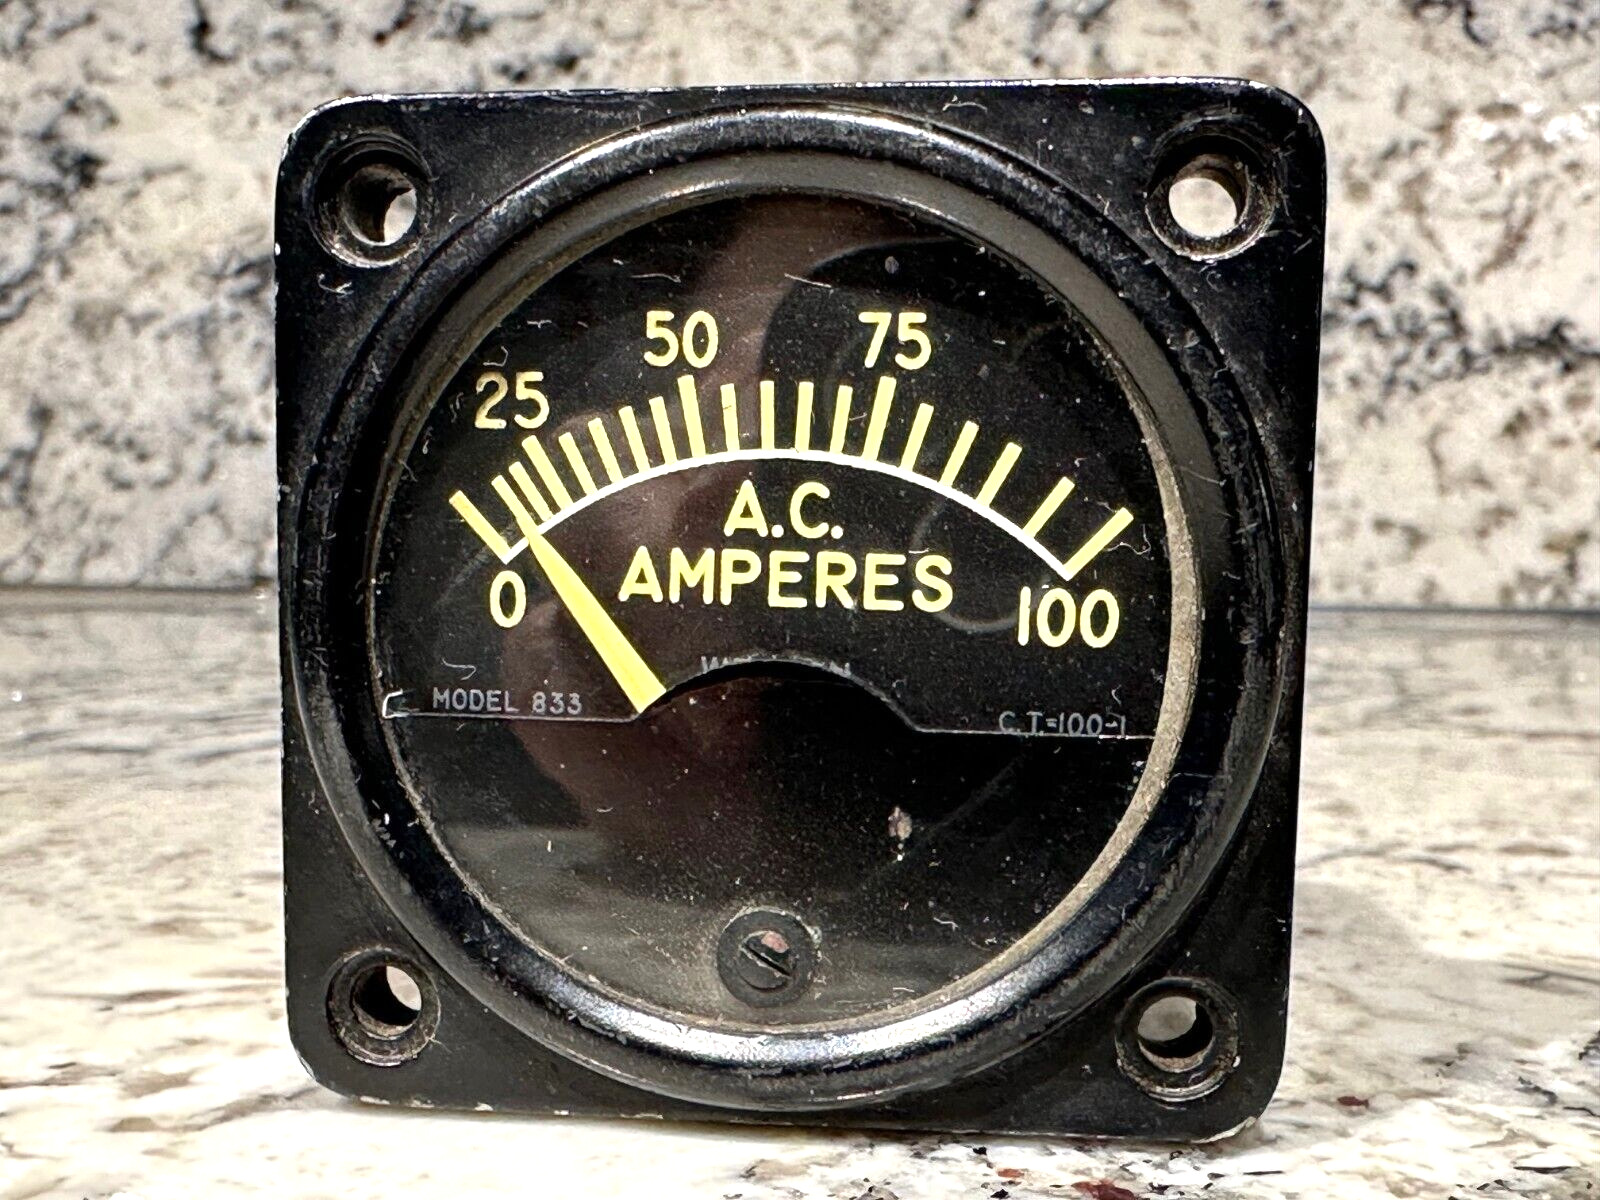 WESTON Model 833 A. C. Amperes Indicator Aviation Dial 1-100 Black Square